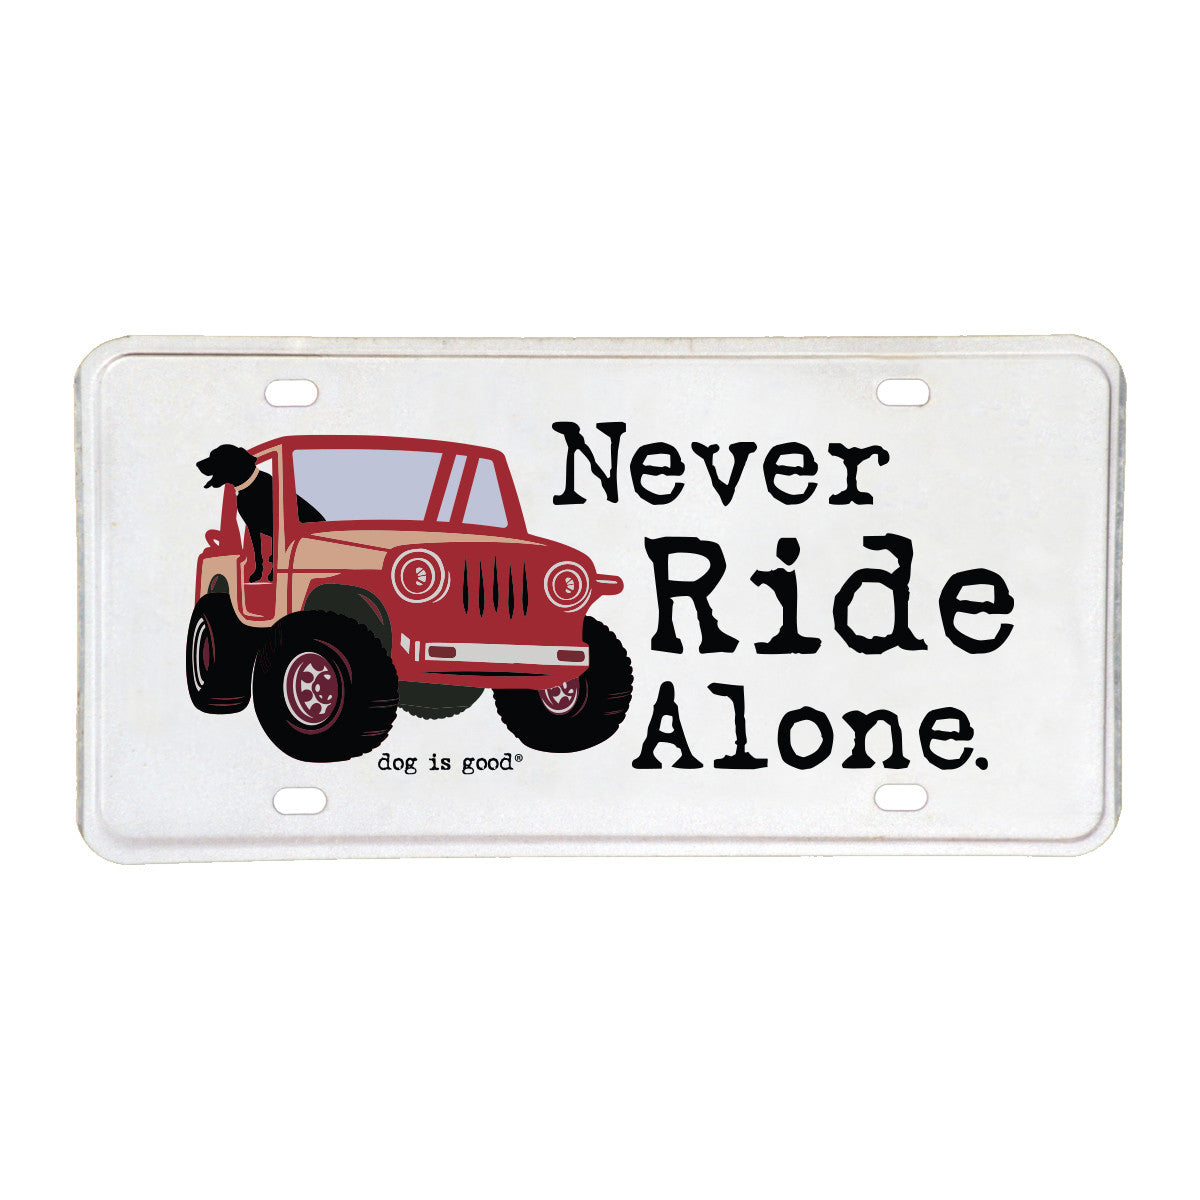 Never Ride Alone License Plate